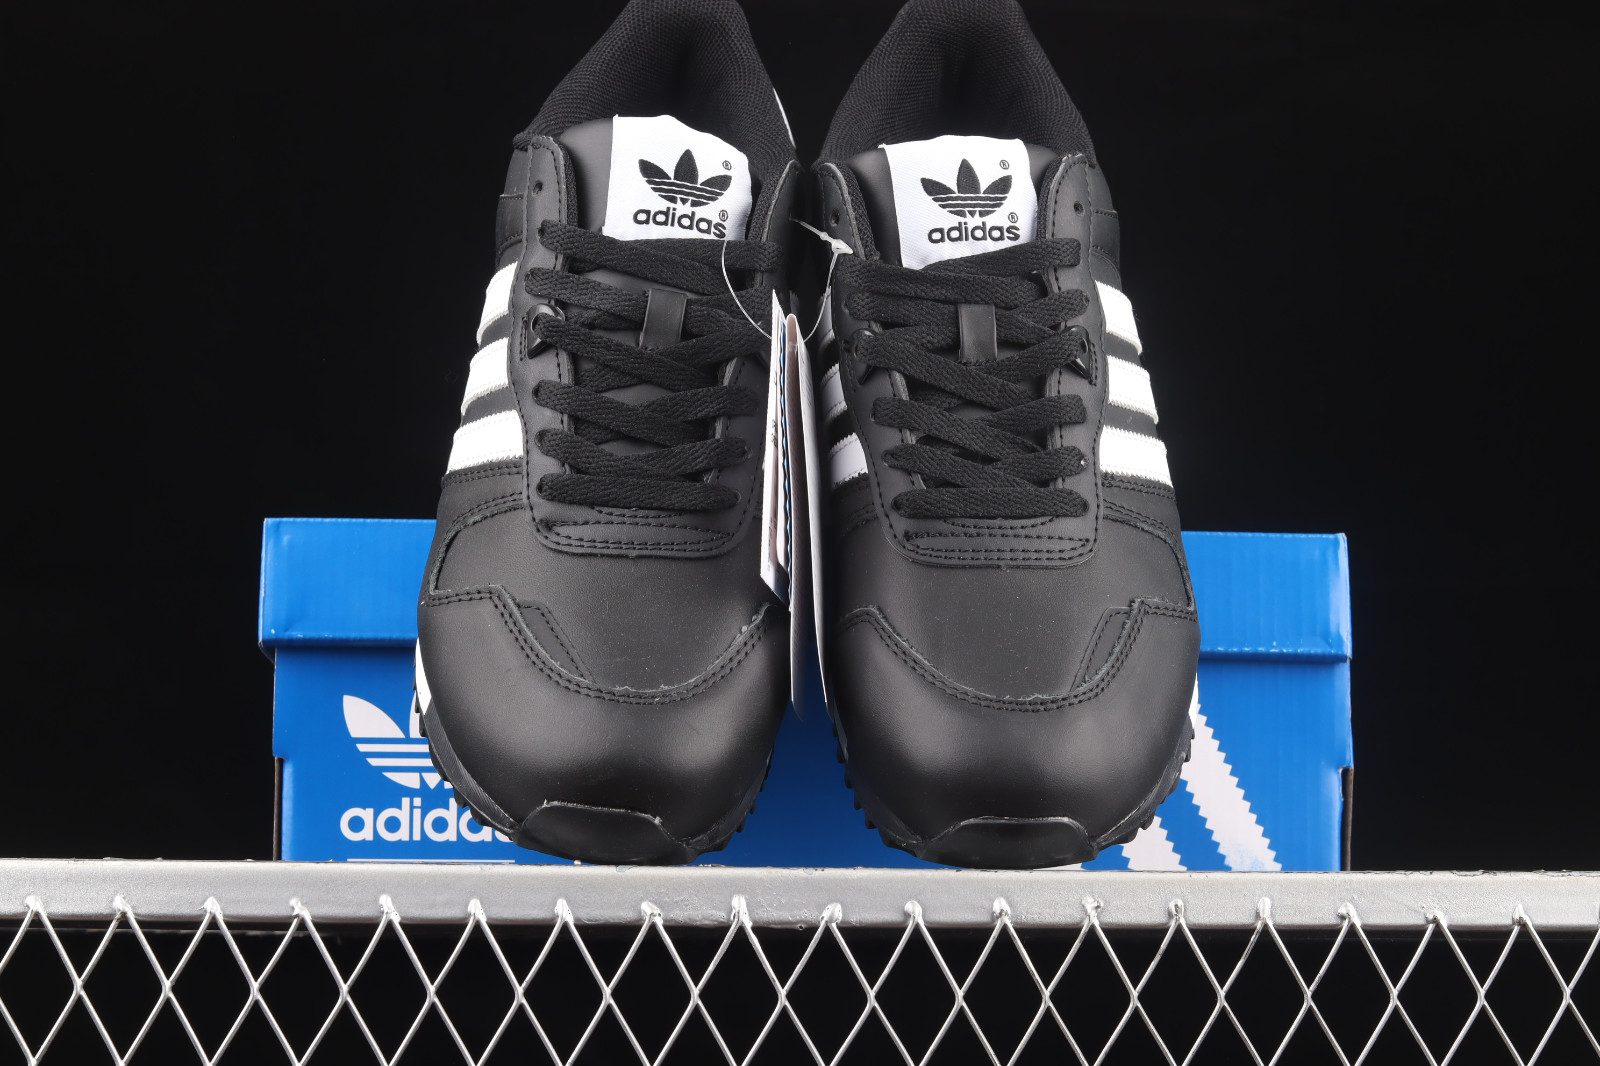 Prima Abundantemente bordado Sepsale - Adidas Original ZX 700 Core Black Cloud White Shoes G63499 -  Malone Souliers Sneakers Deon Bianco